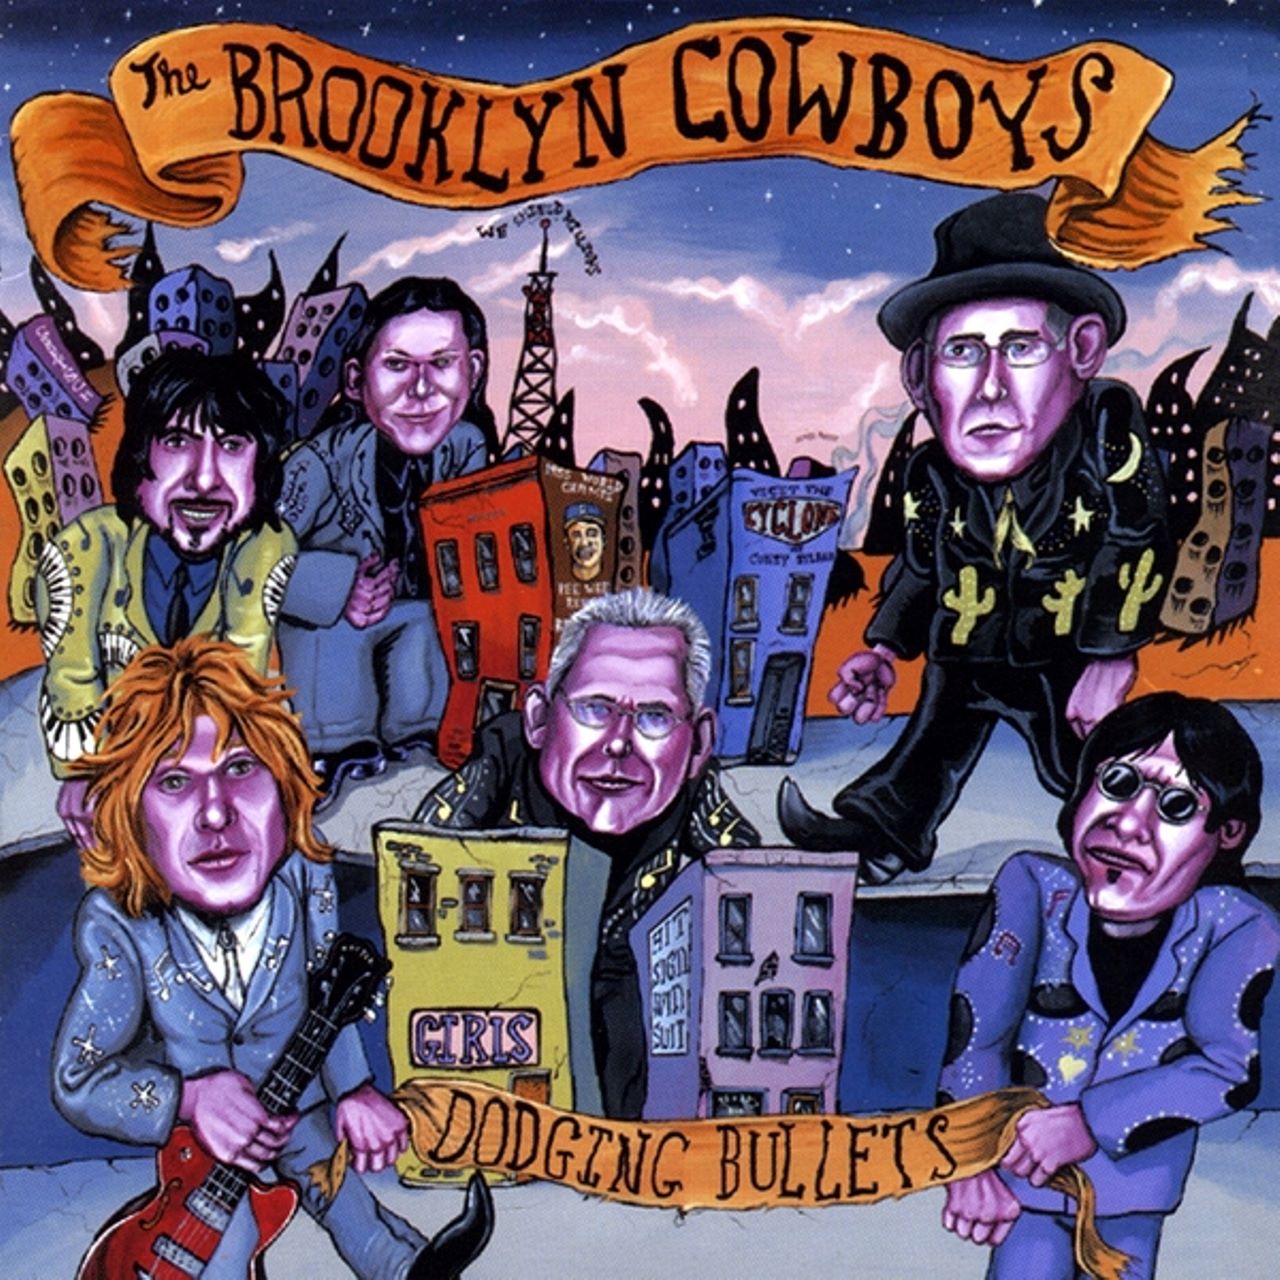 Brooklyn Cowboys - Dodging Bullets cover album